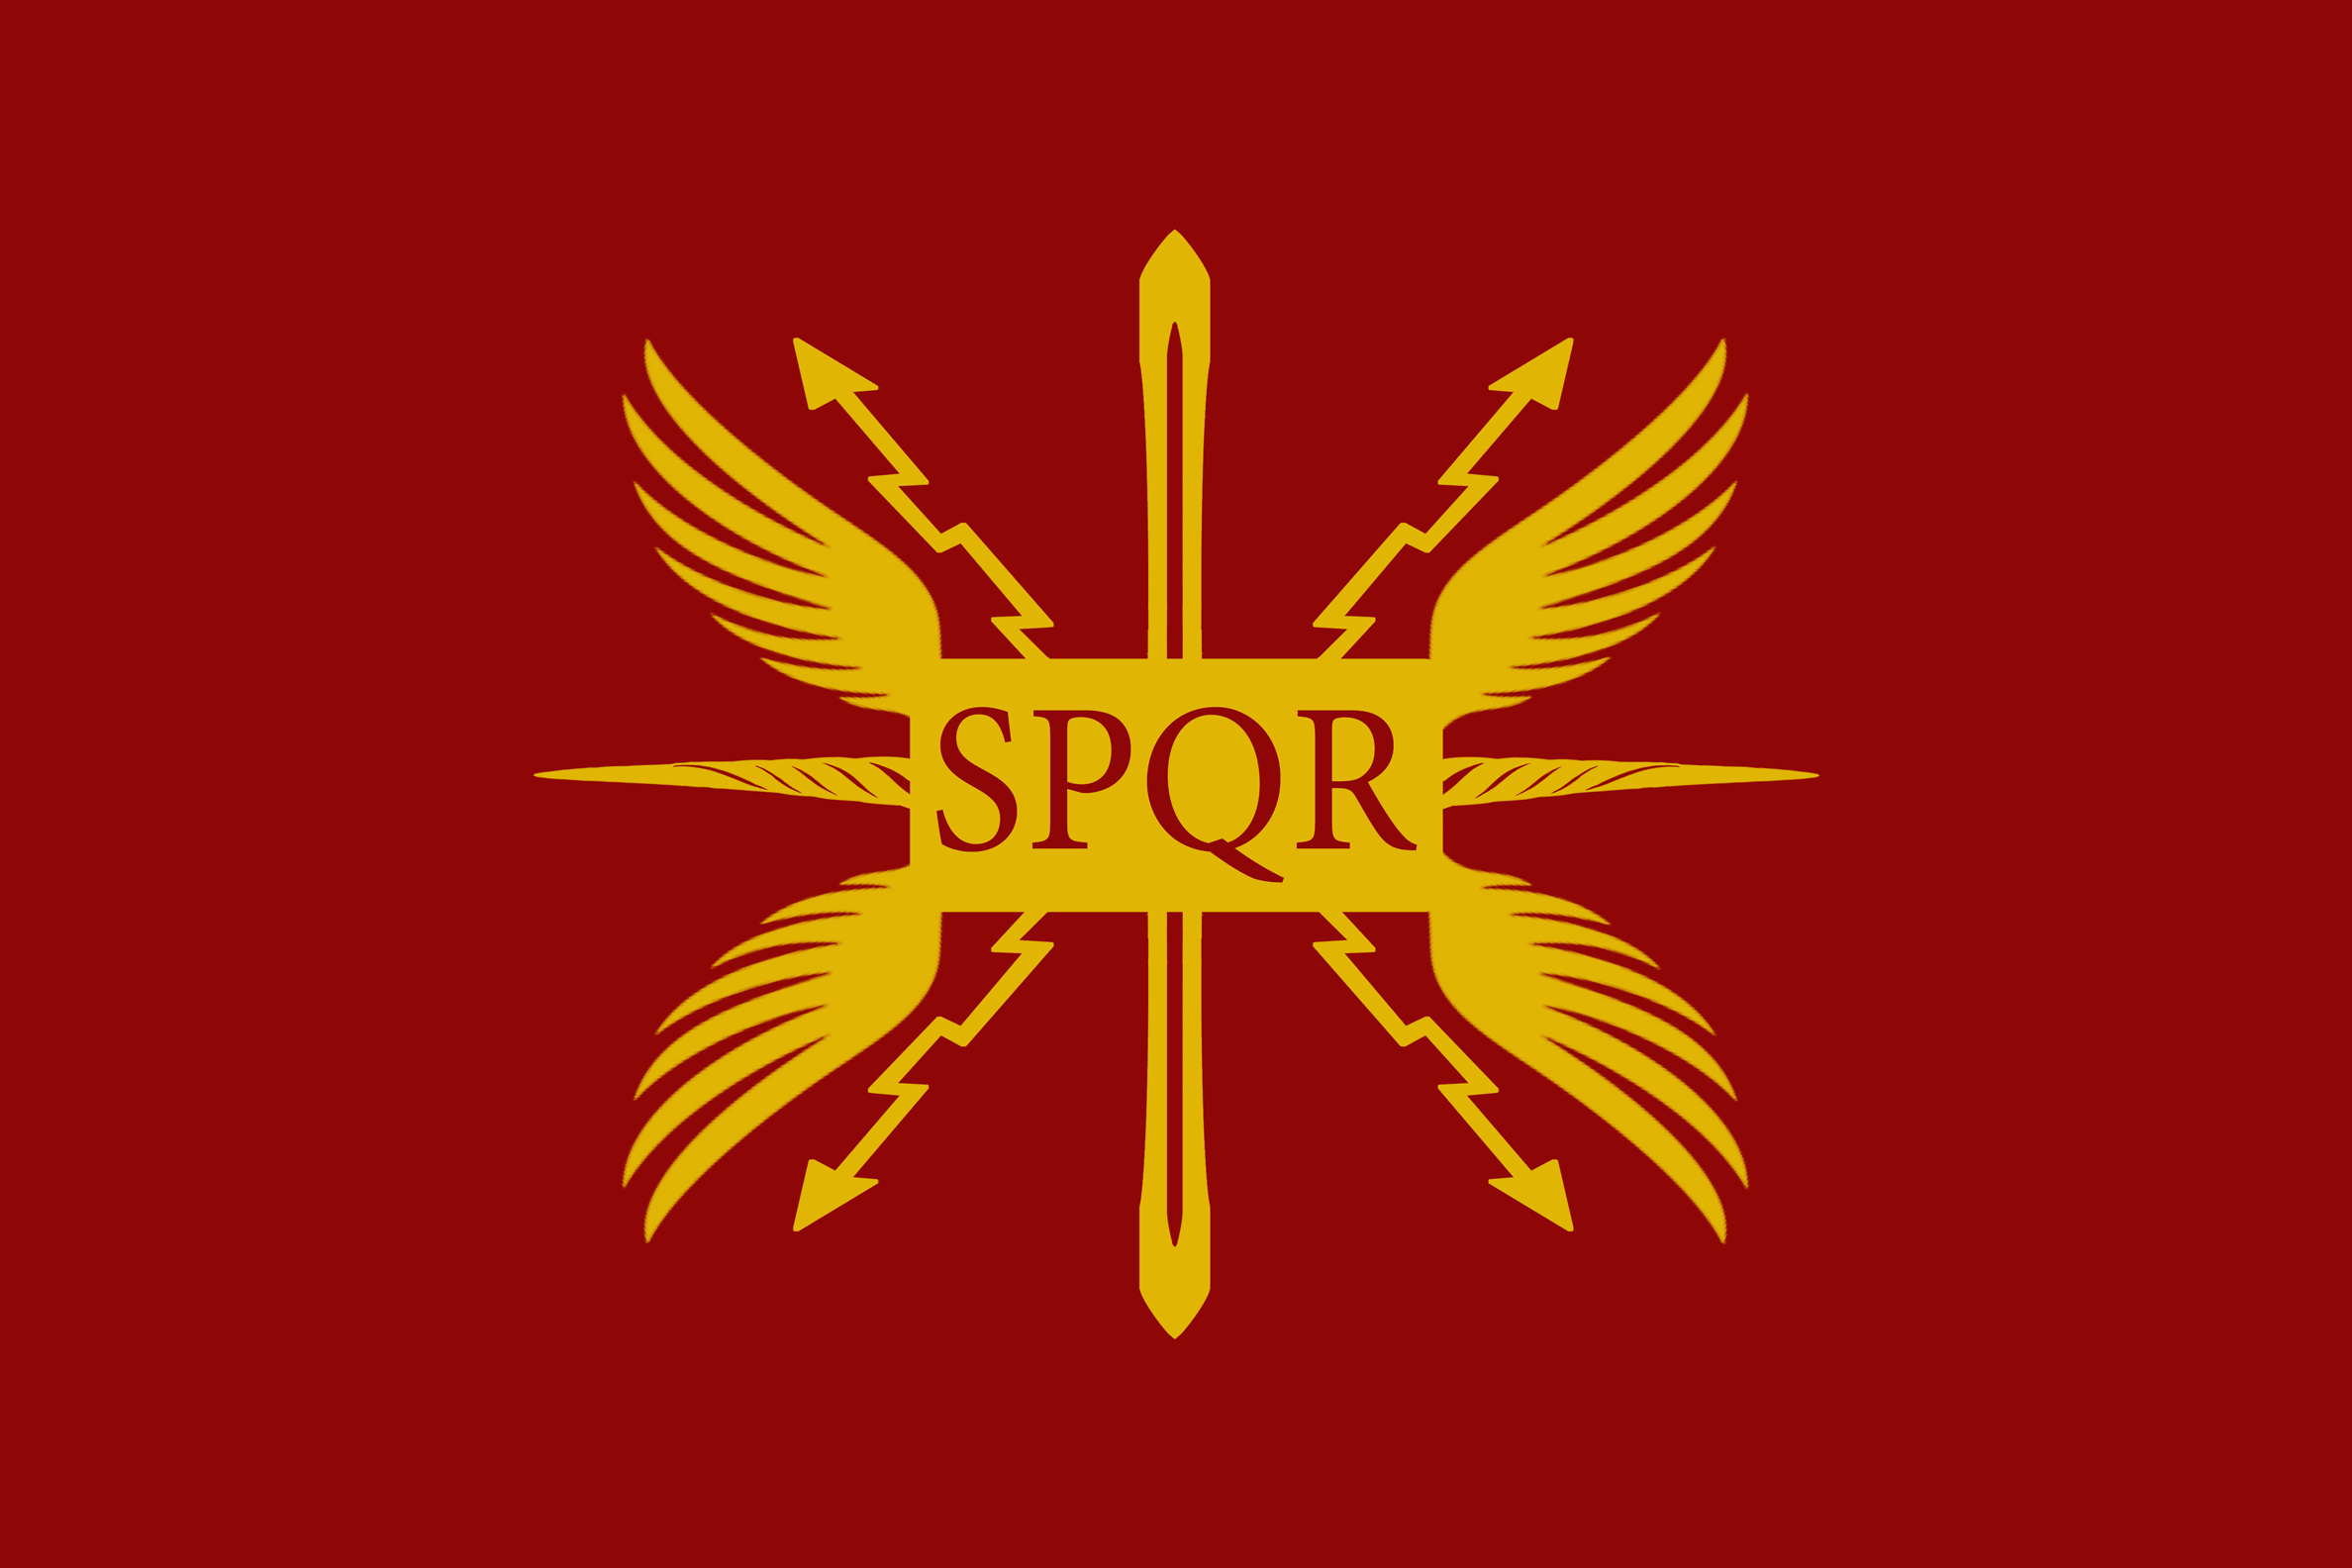 Roman Republic Symbol Image and Sign Ideas